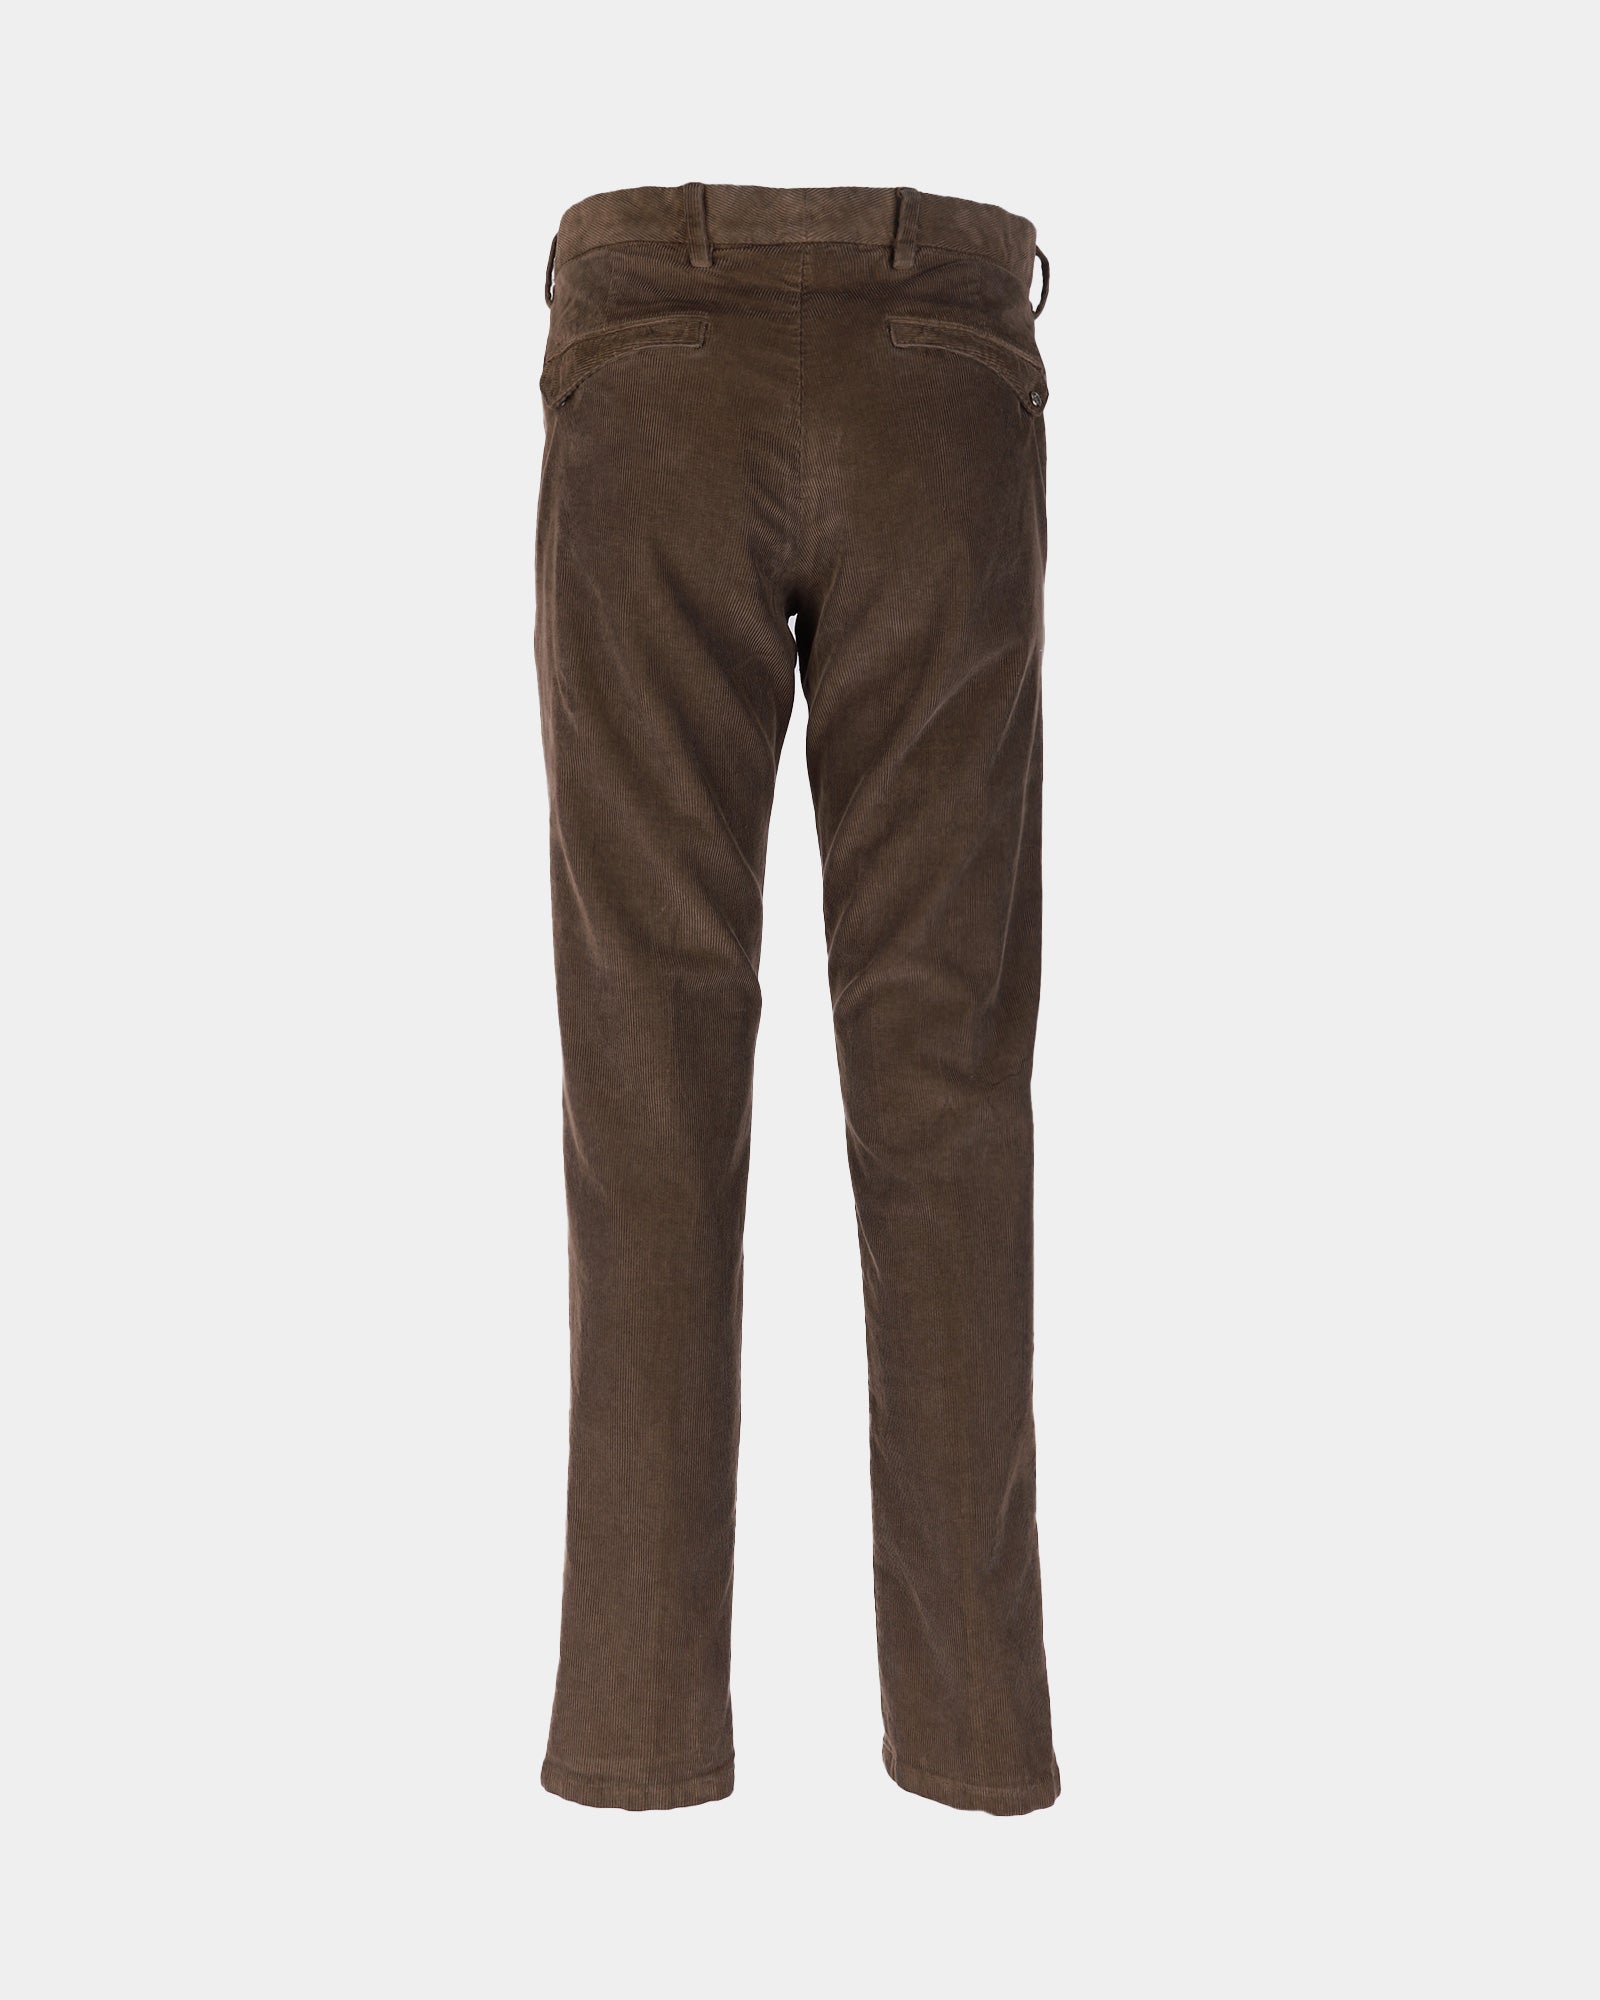 Pantalone PT marrone